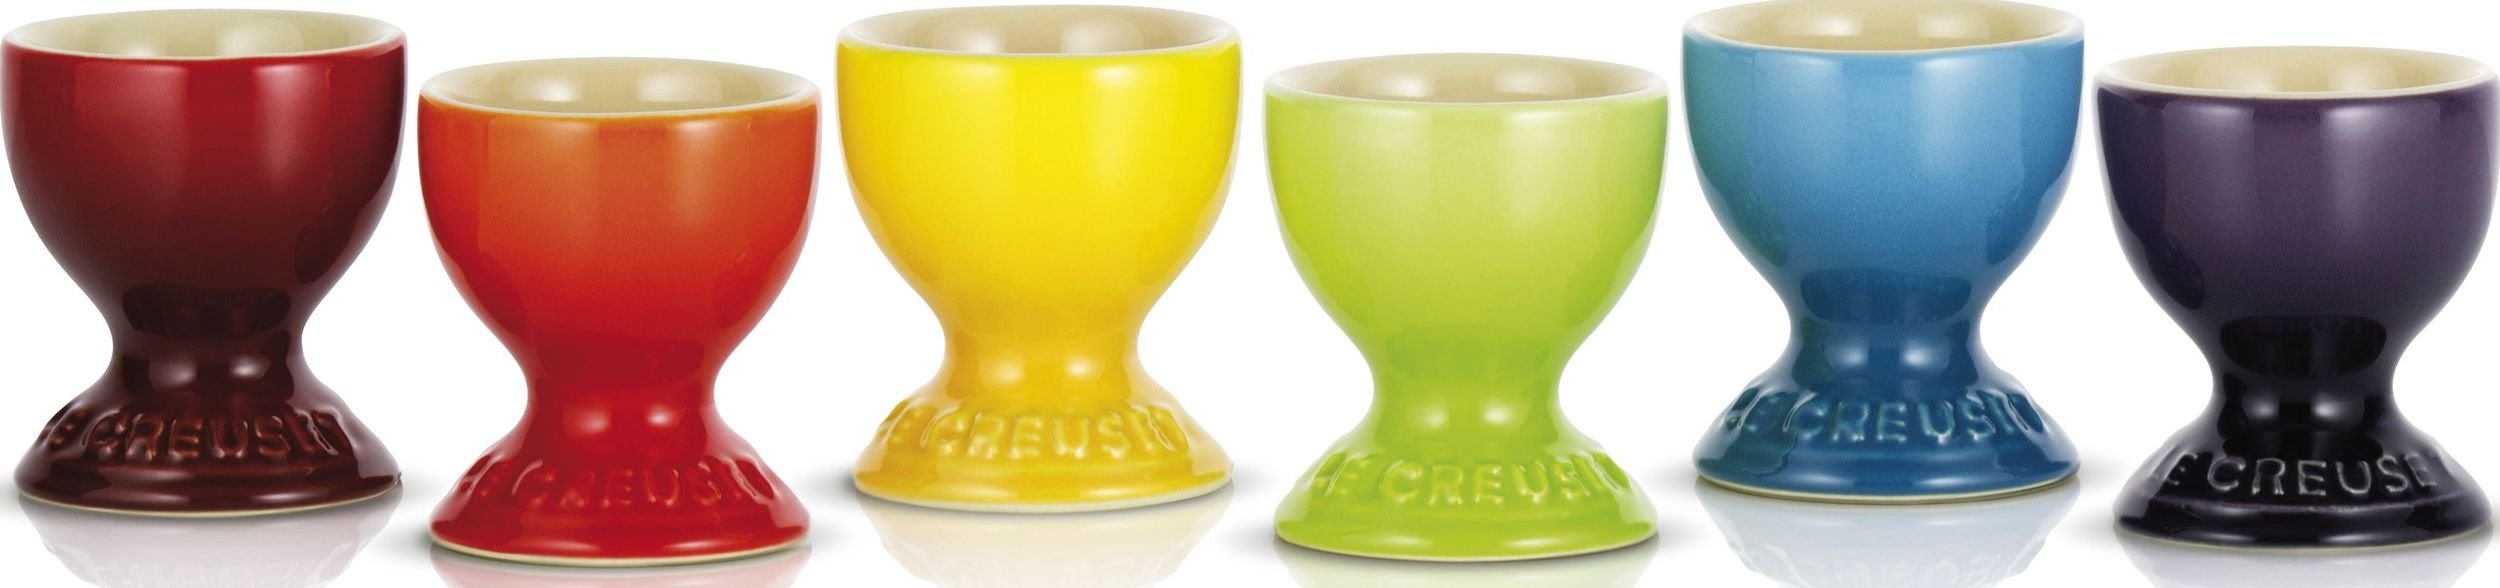 Le Creuset Stoneware Rainbow set of 6 egg cups